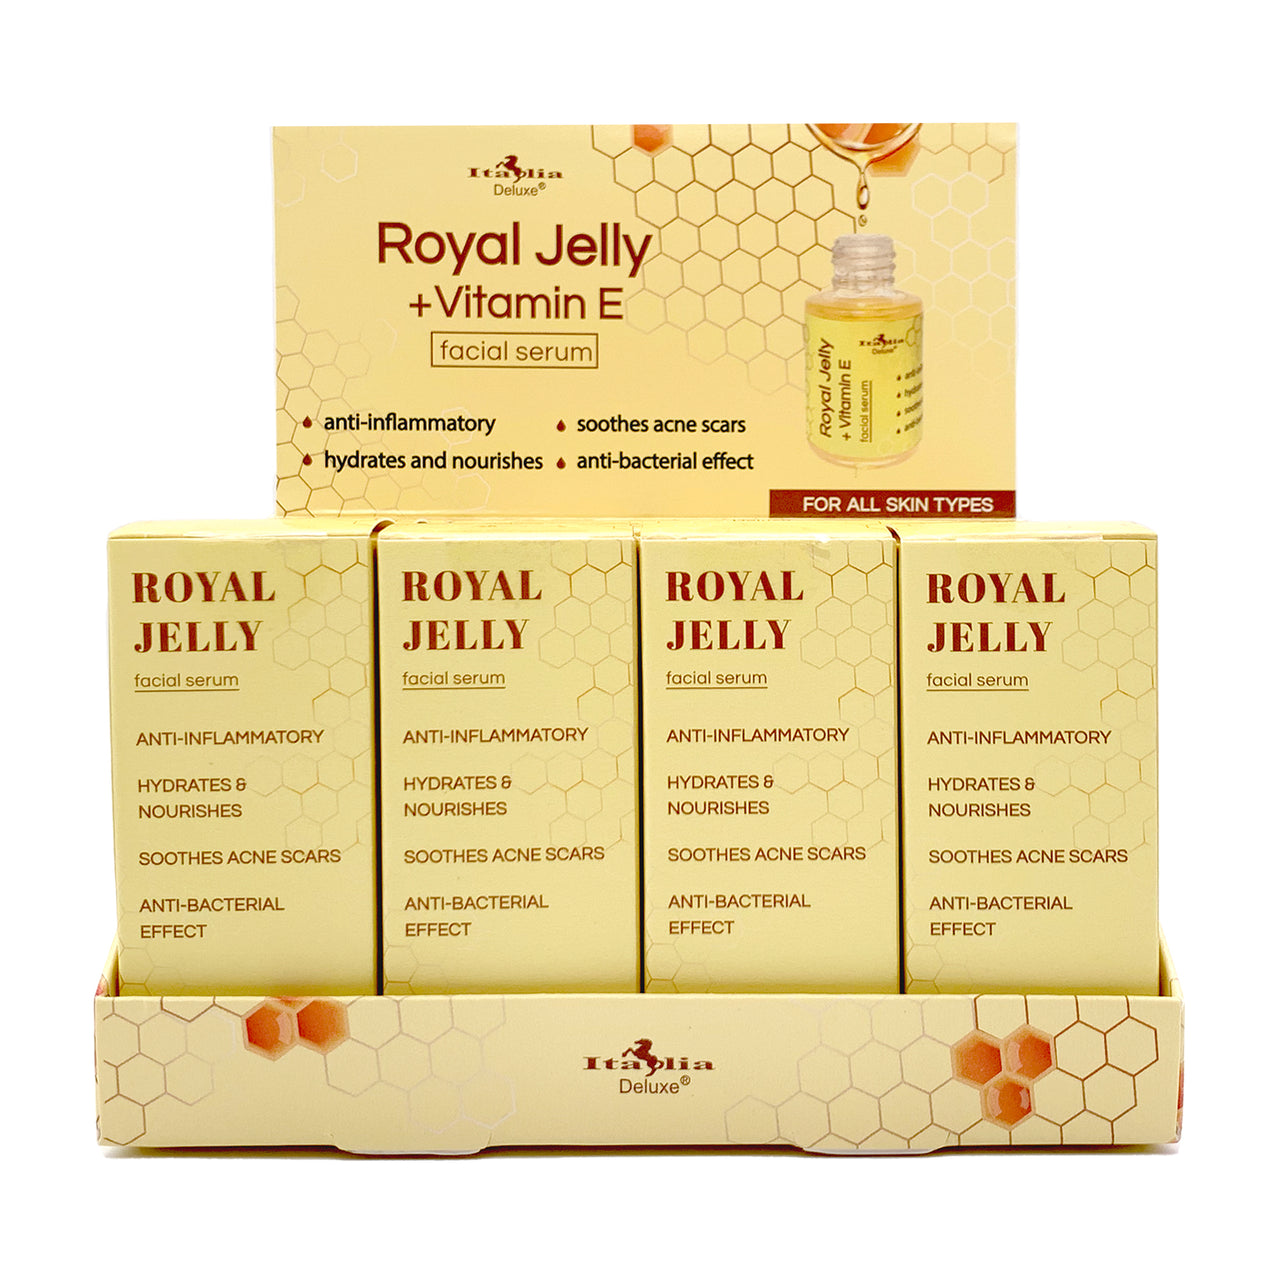 ITA109-4 Royal Jelly + Vitamin E Facial Serum : 1 DZ